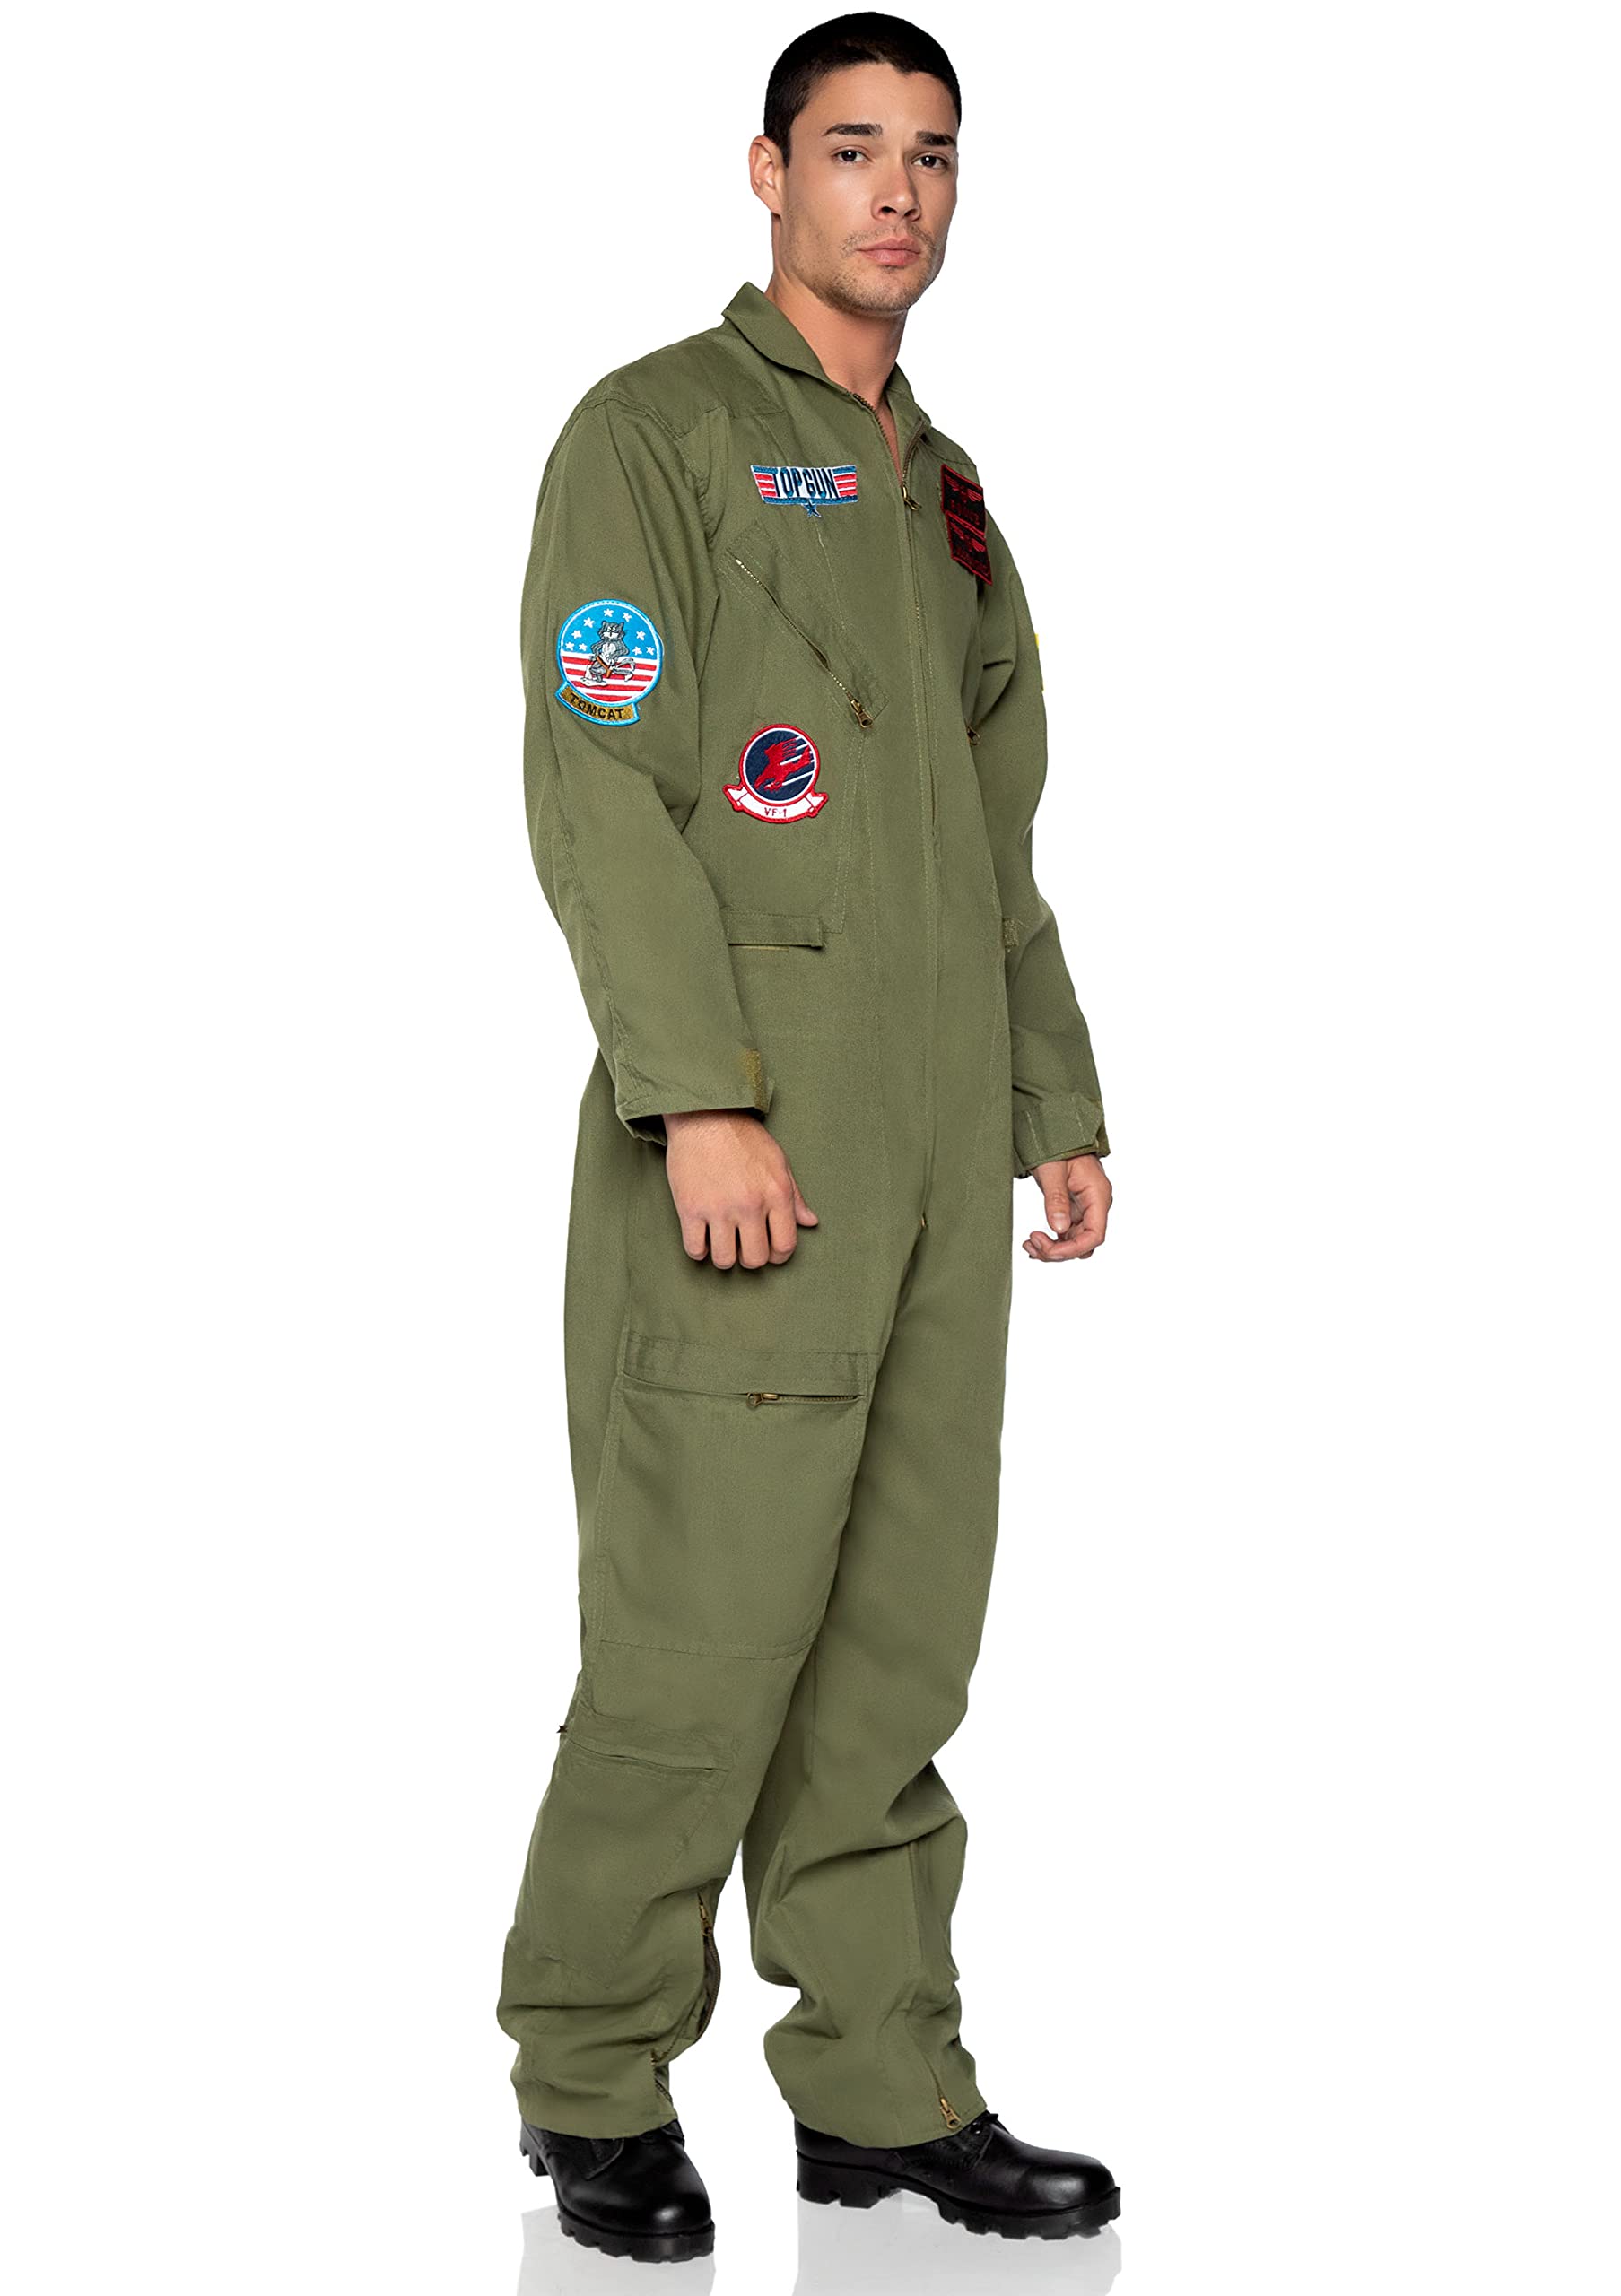 Leg Avenue Men's Top Gun Flight Suit Costume